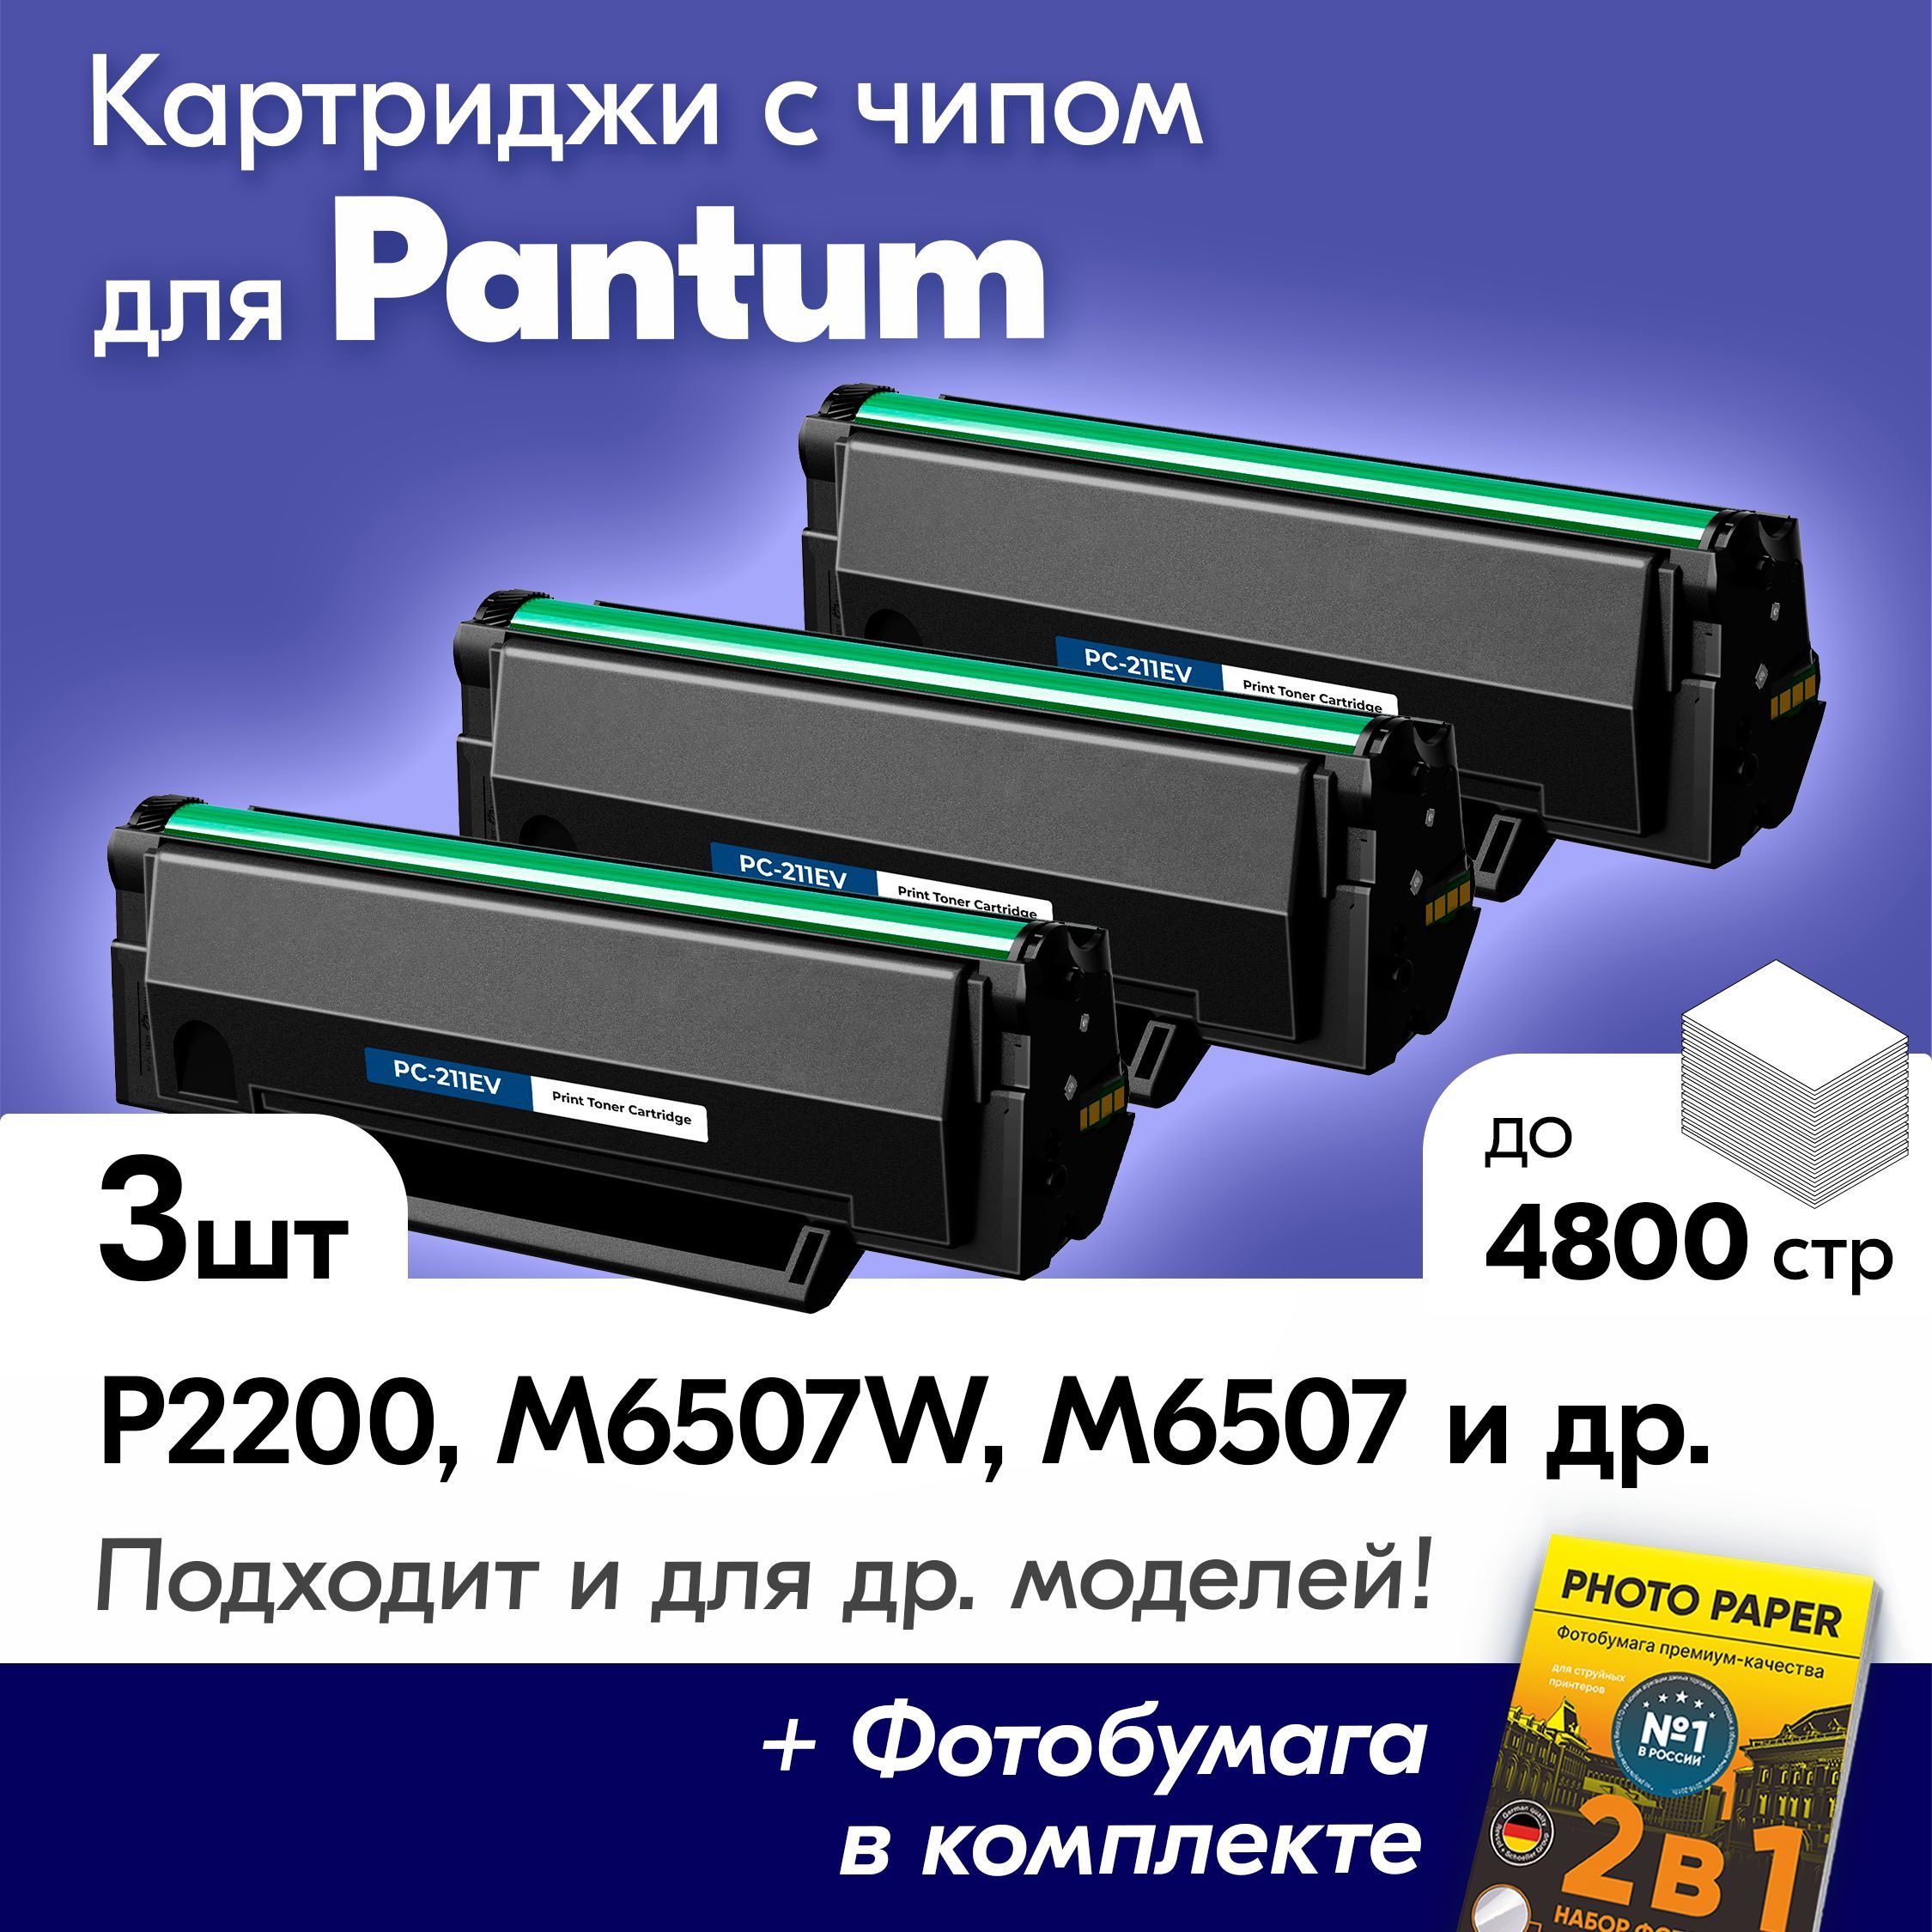 Pantum m6507w отзывы. Pantum PC-211. Pantum p2502. Принтер лазерный Pantum p2502. Pantum p2207 драйвер.